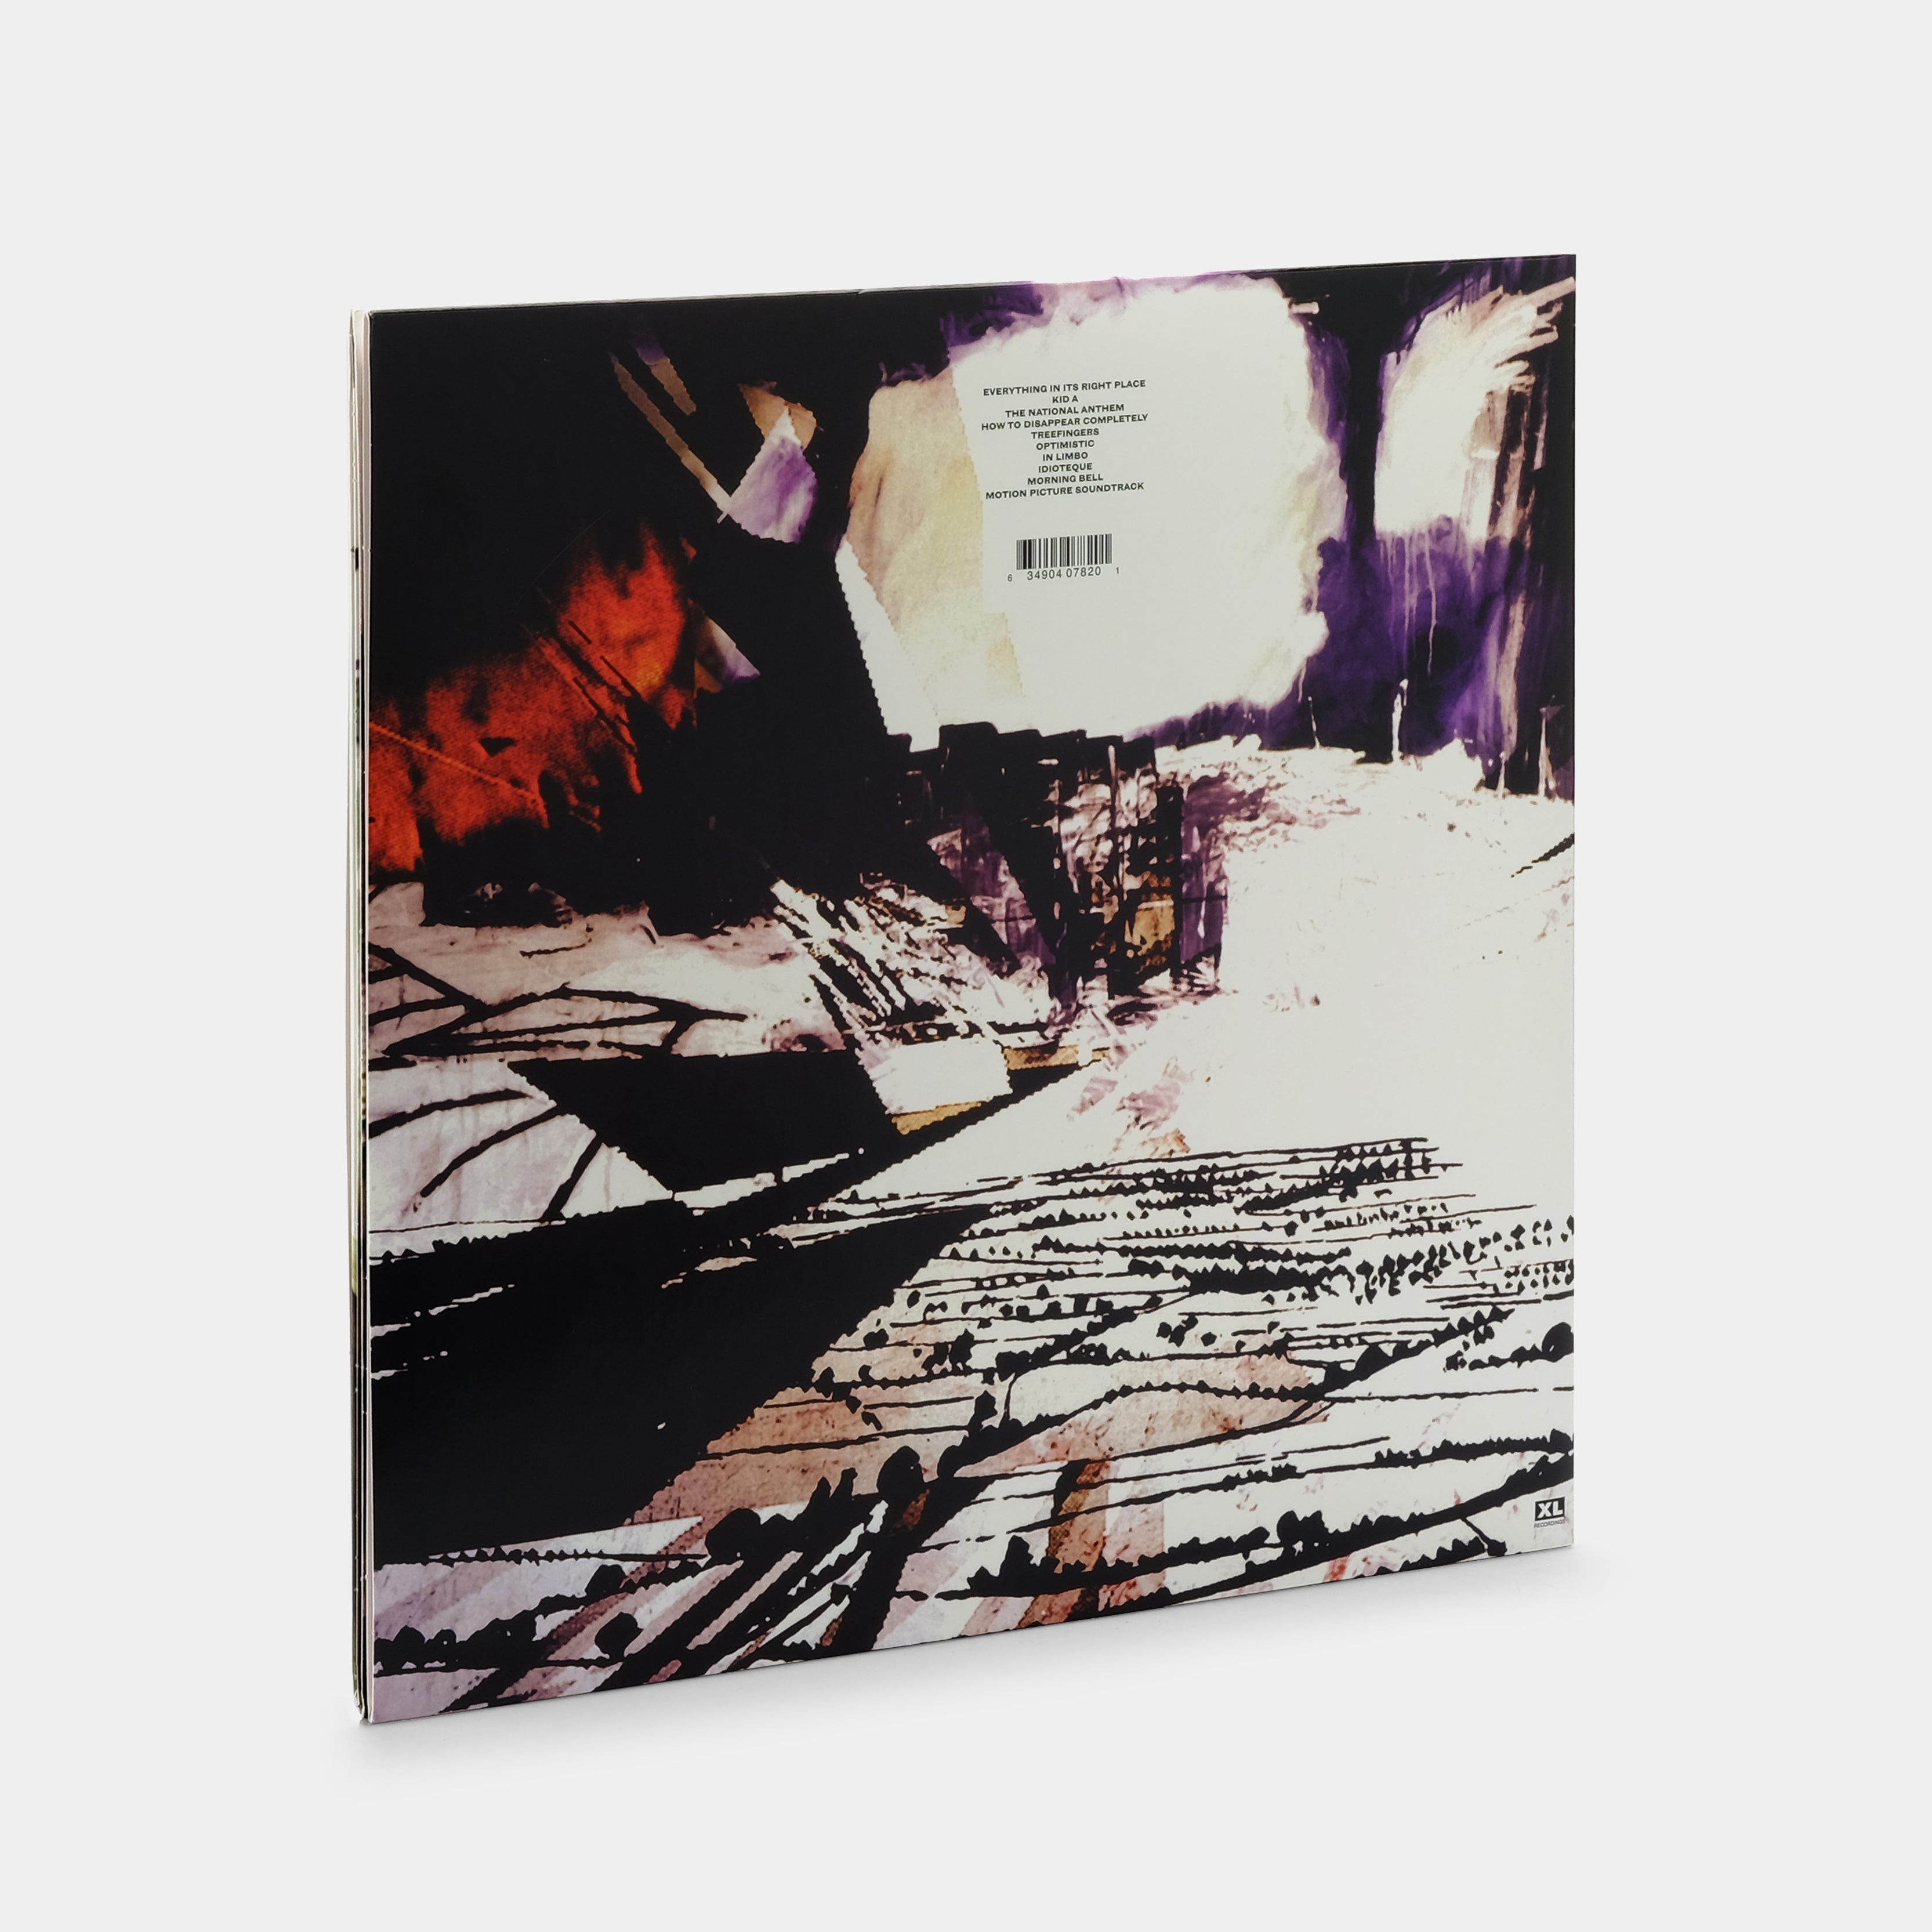 Radiohead Vinyl Record Art